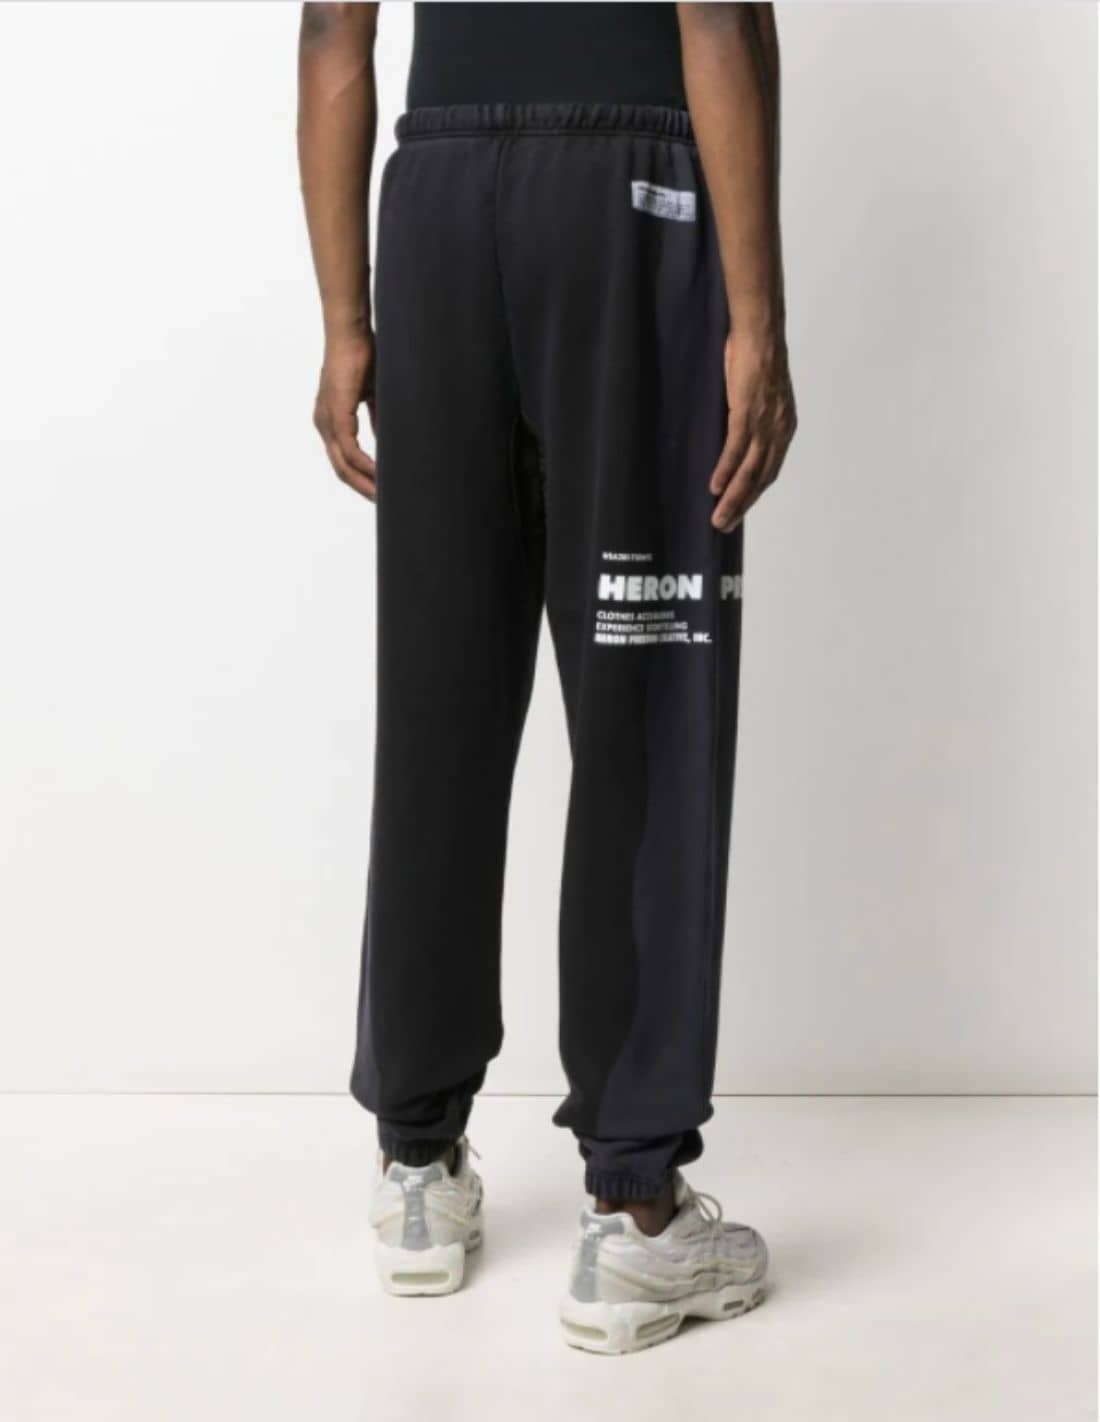 HERON PRESTON x Caterpillar two-tone jogging pants for men - SS21